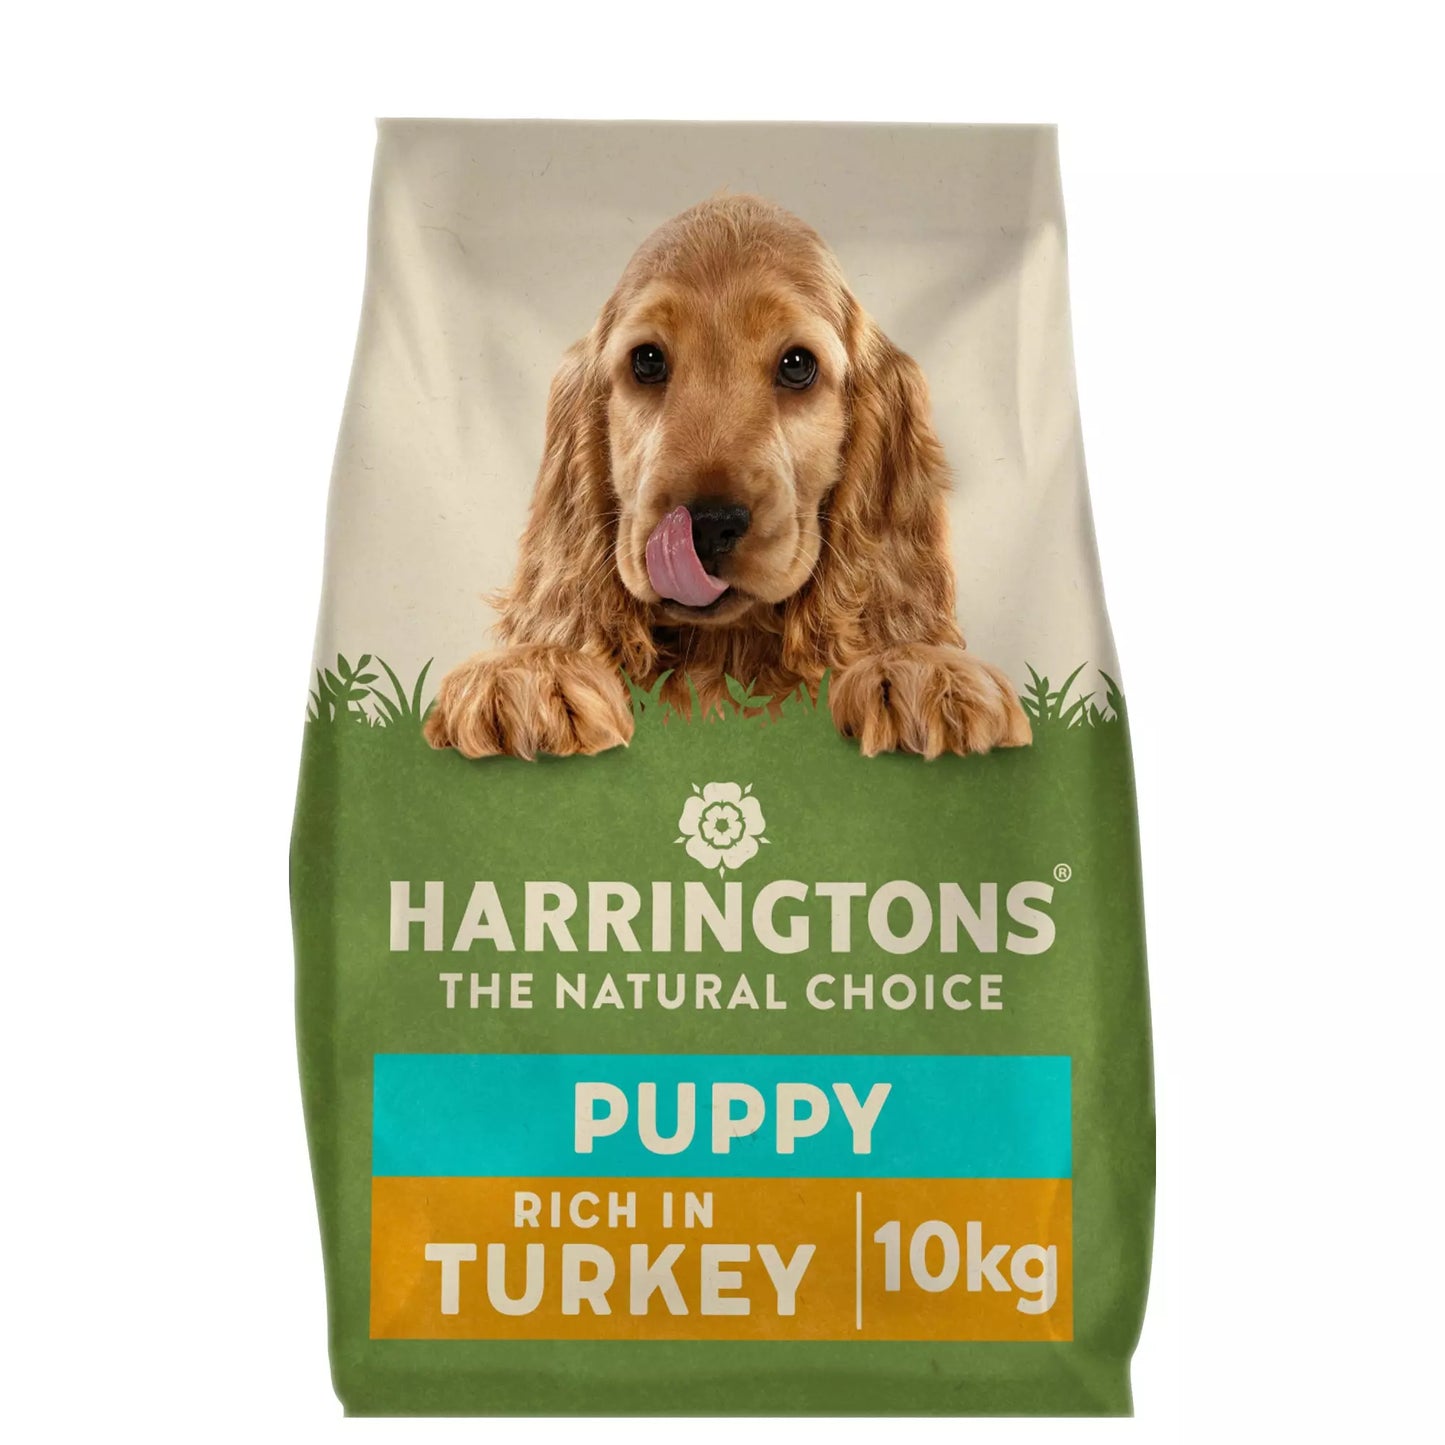 Harringtons Puppy Turkey 10kg